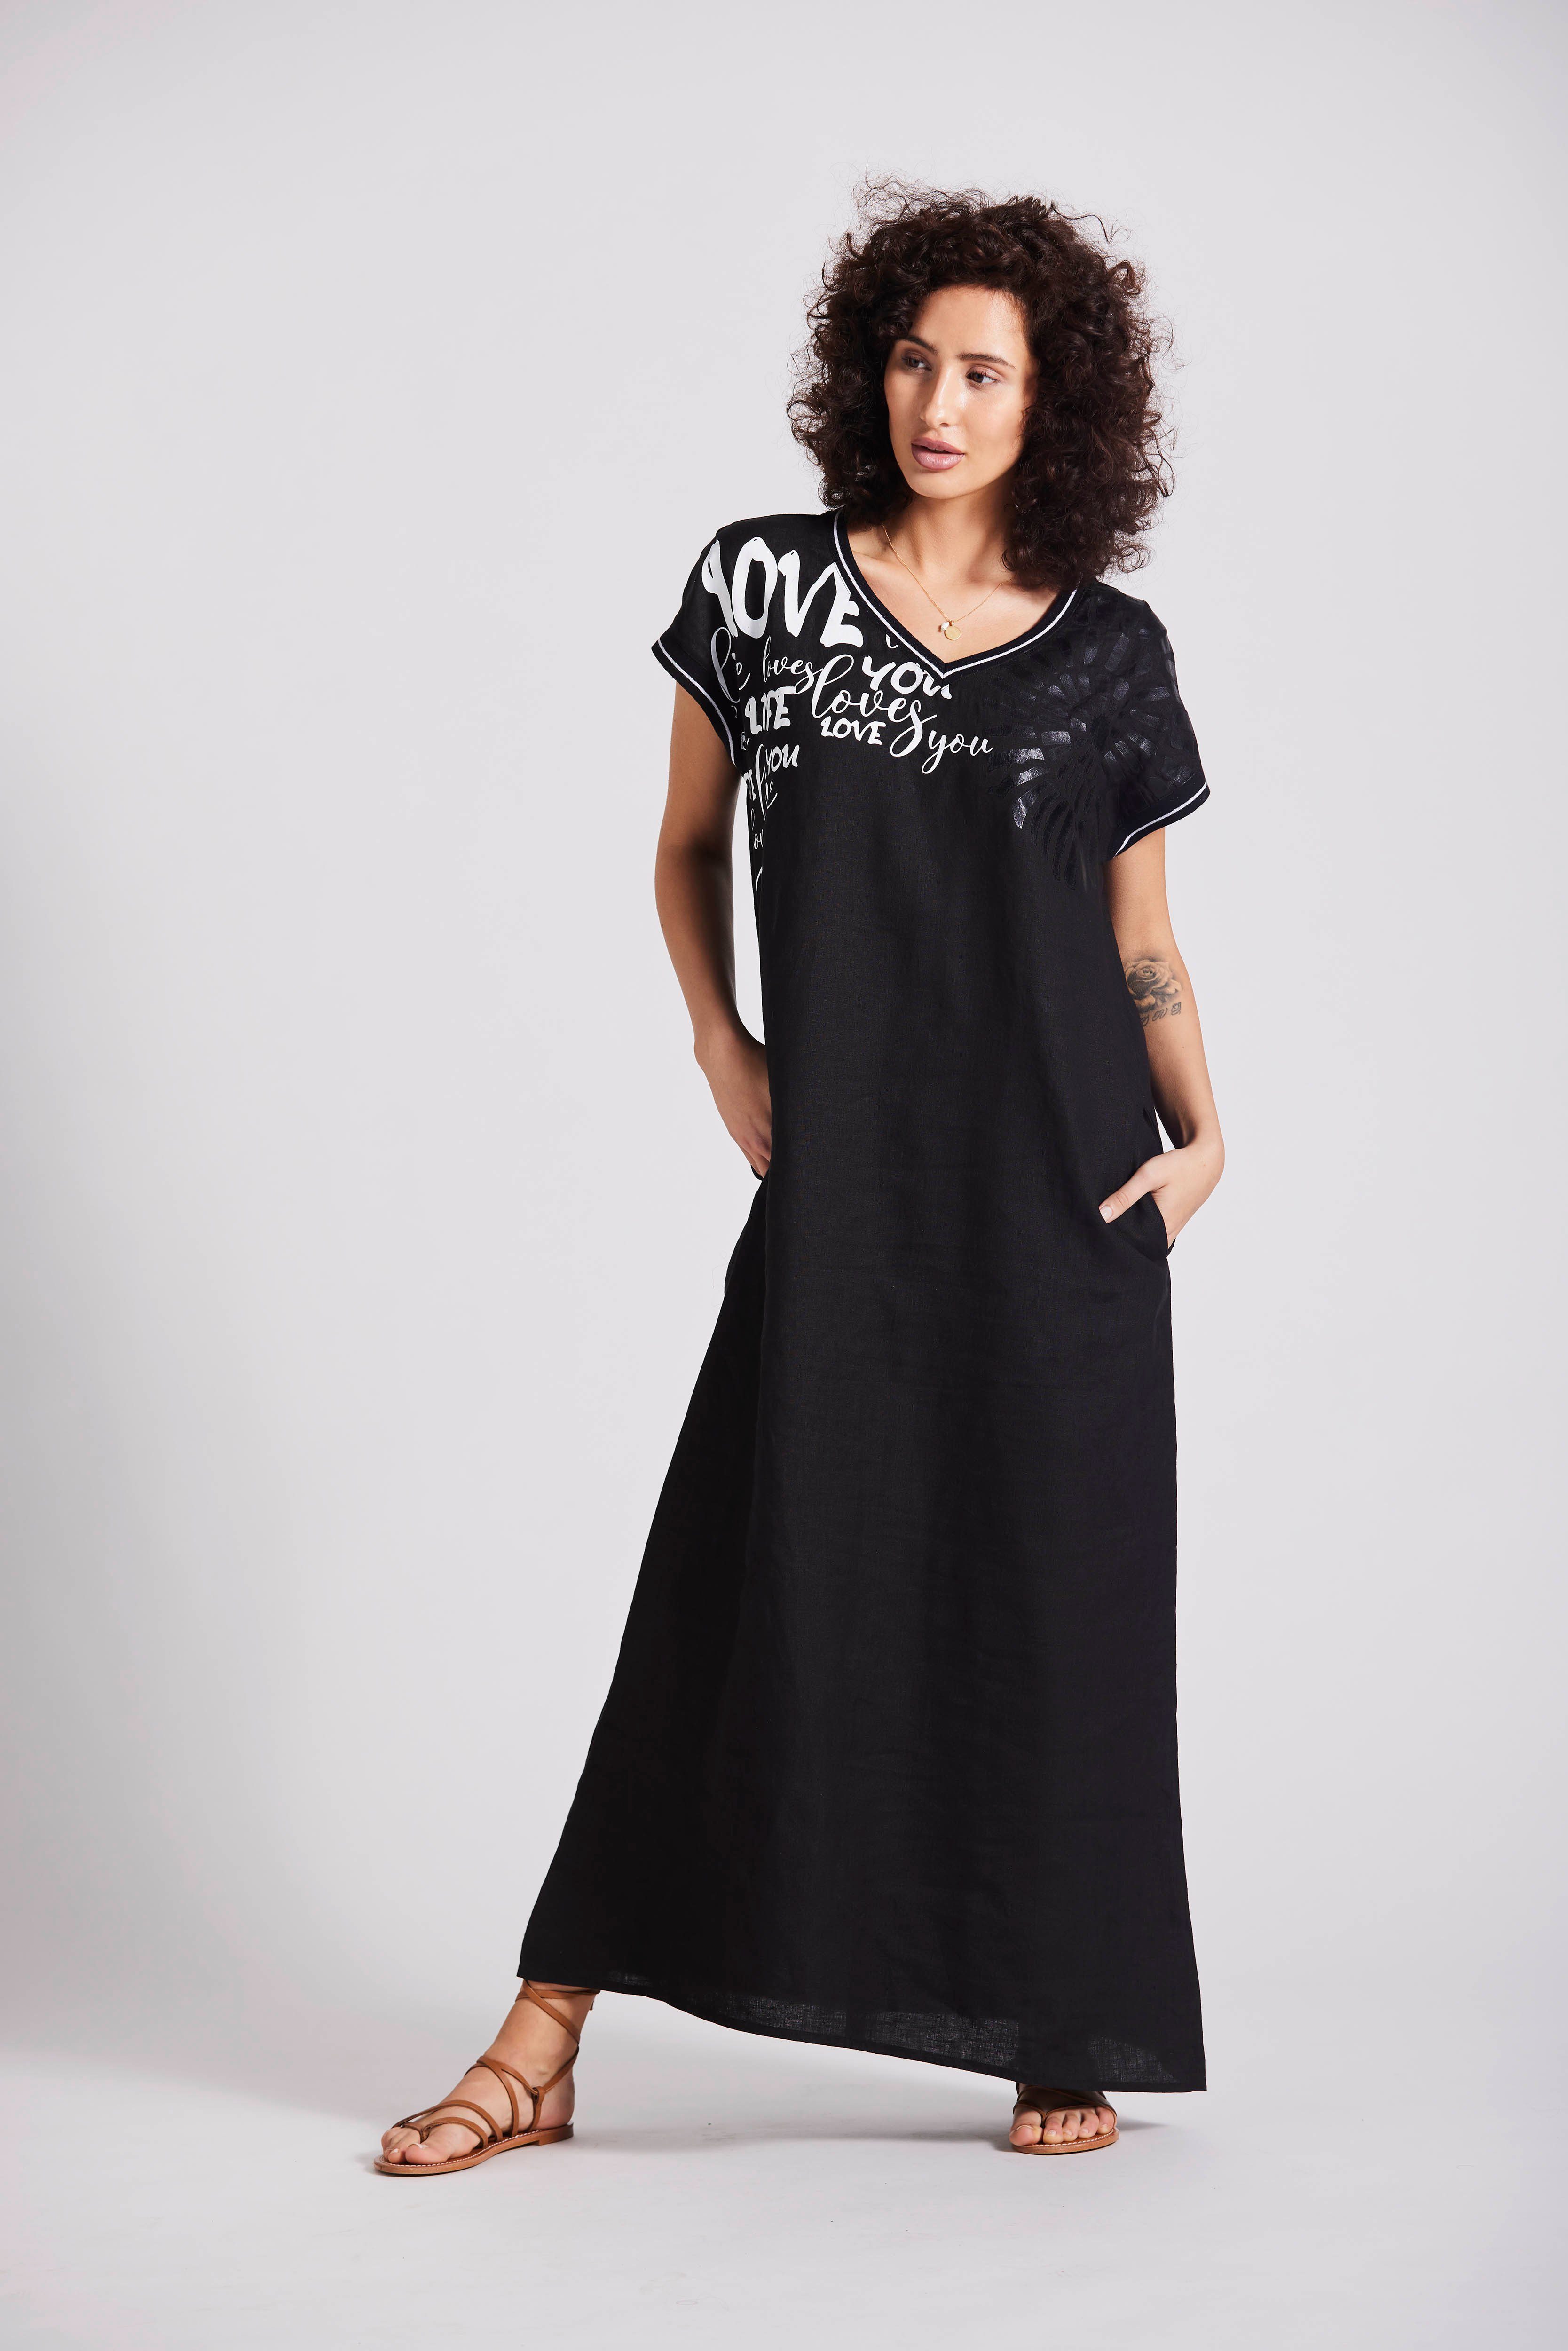 Damen Kleider Andijamo-Fashion Maxikleid LOVE LEINEN exklusiv Print